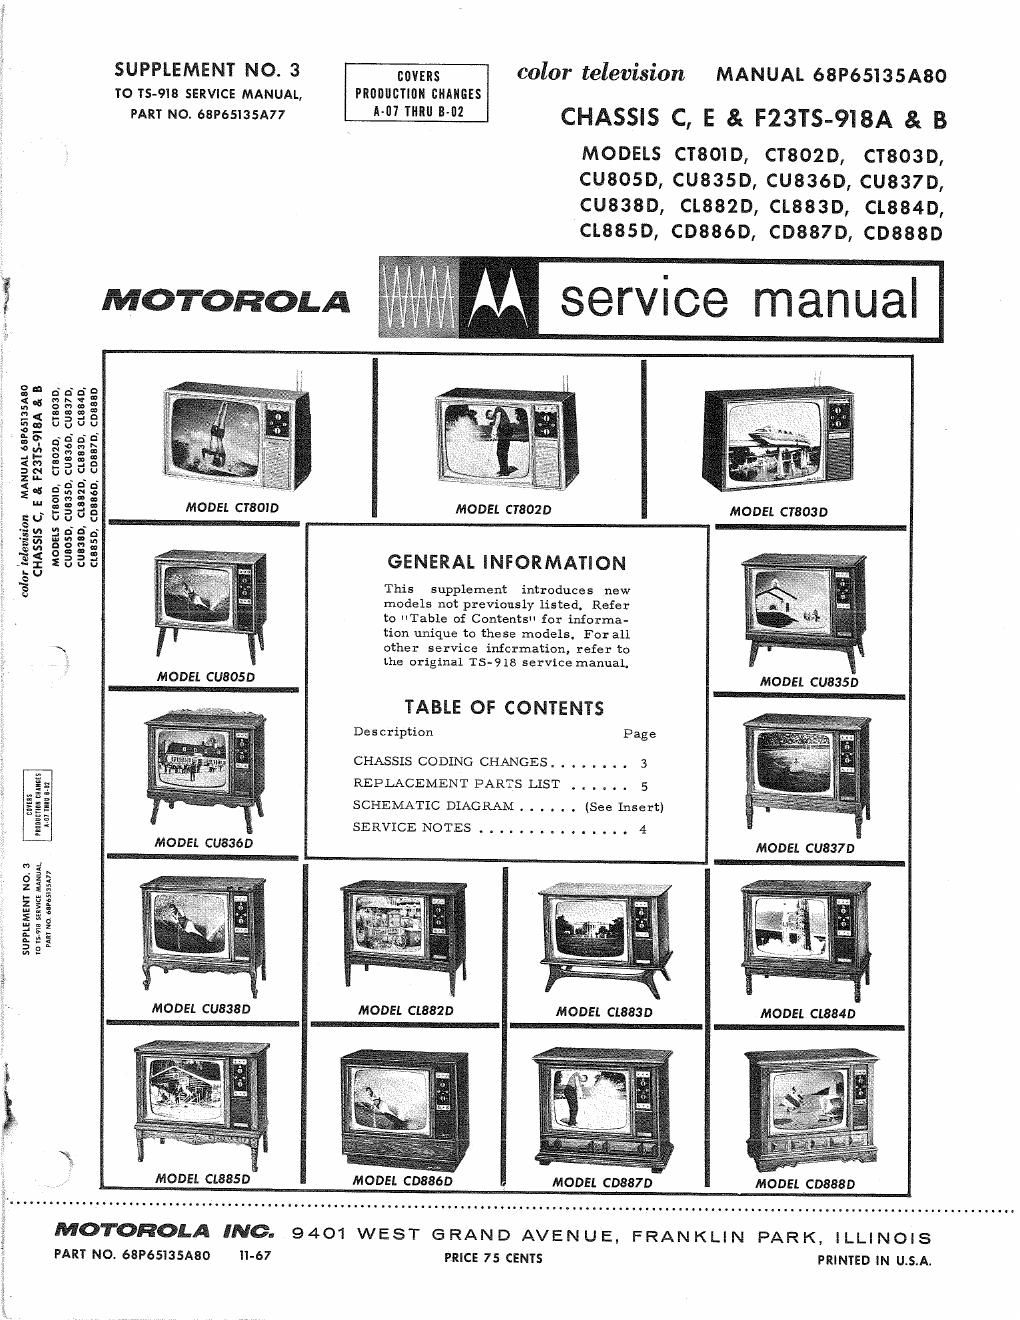 motorola cd 886 d service manual